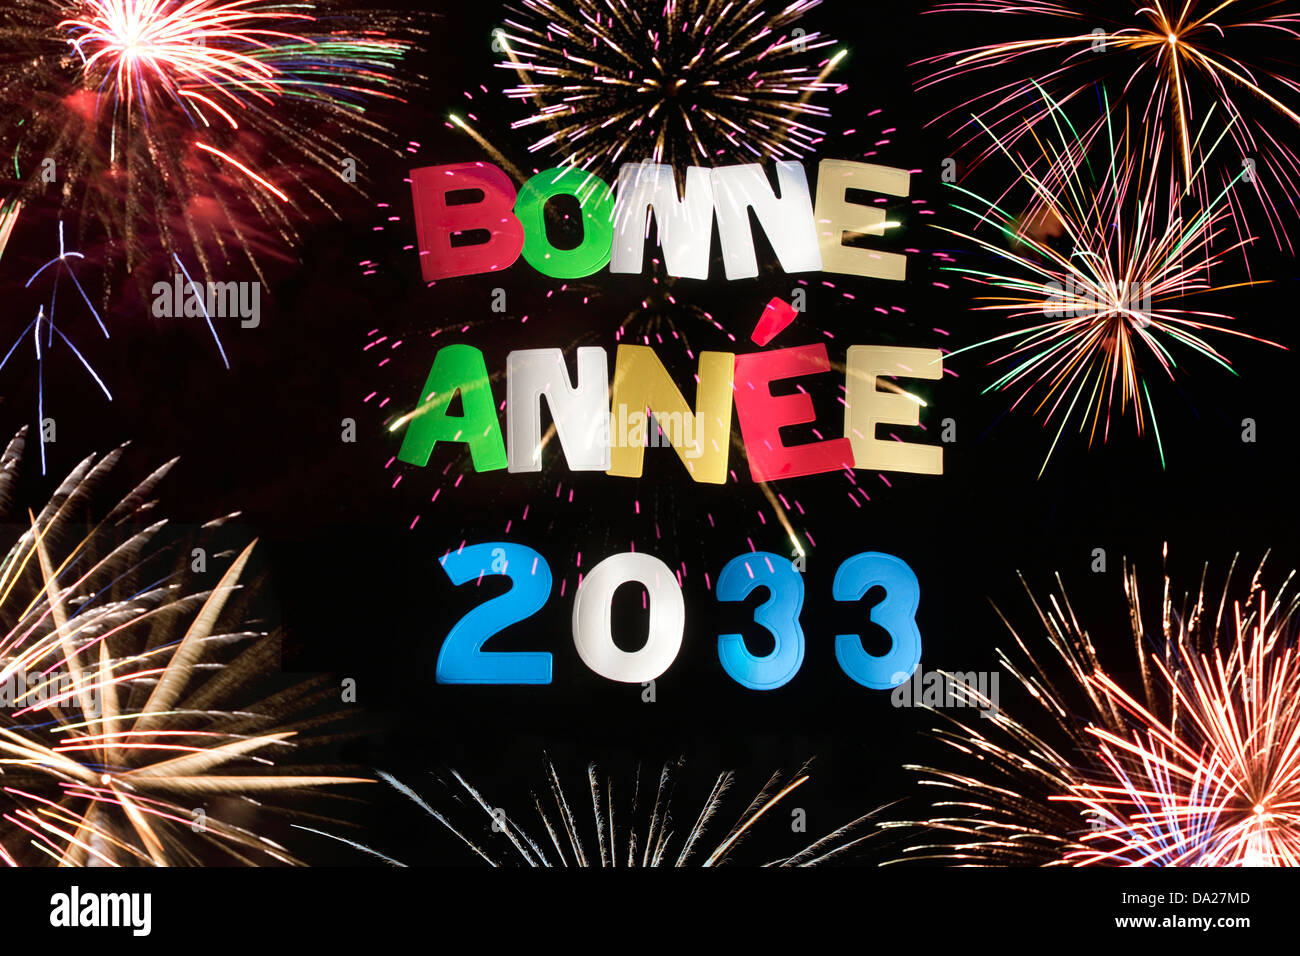 BONNE ANNEE 2033 Stock Photo